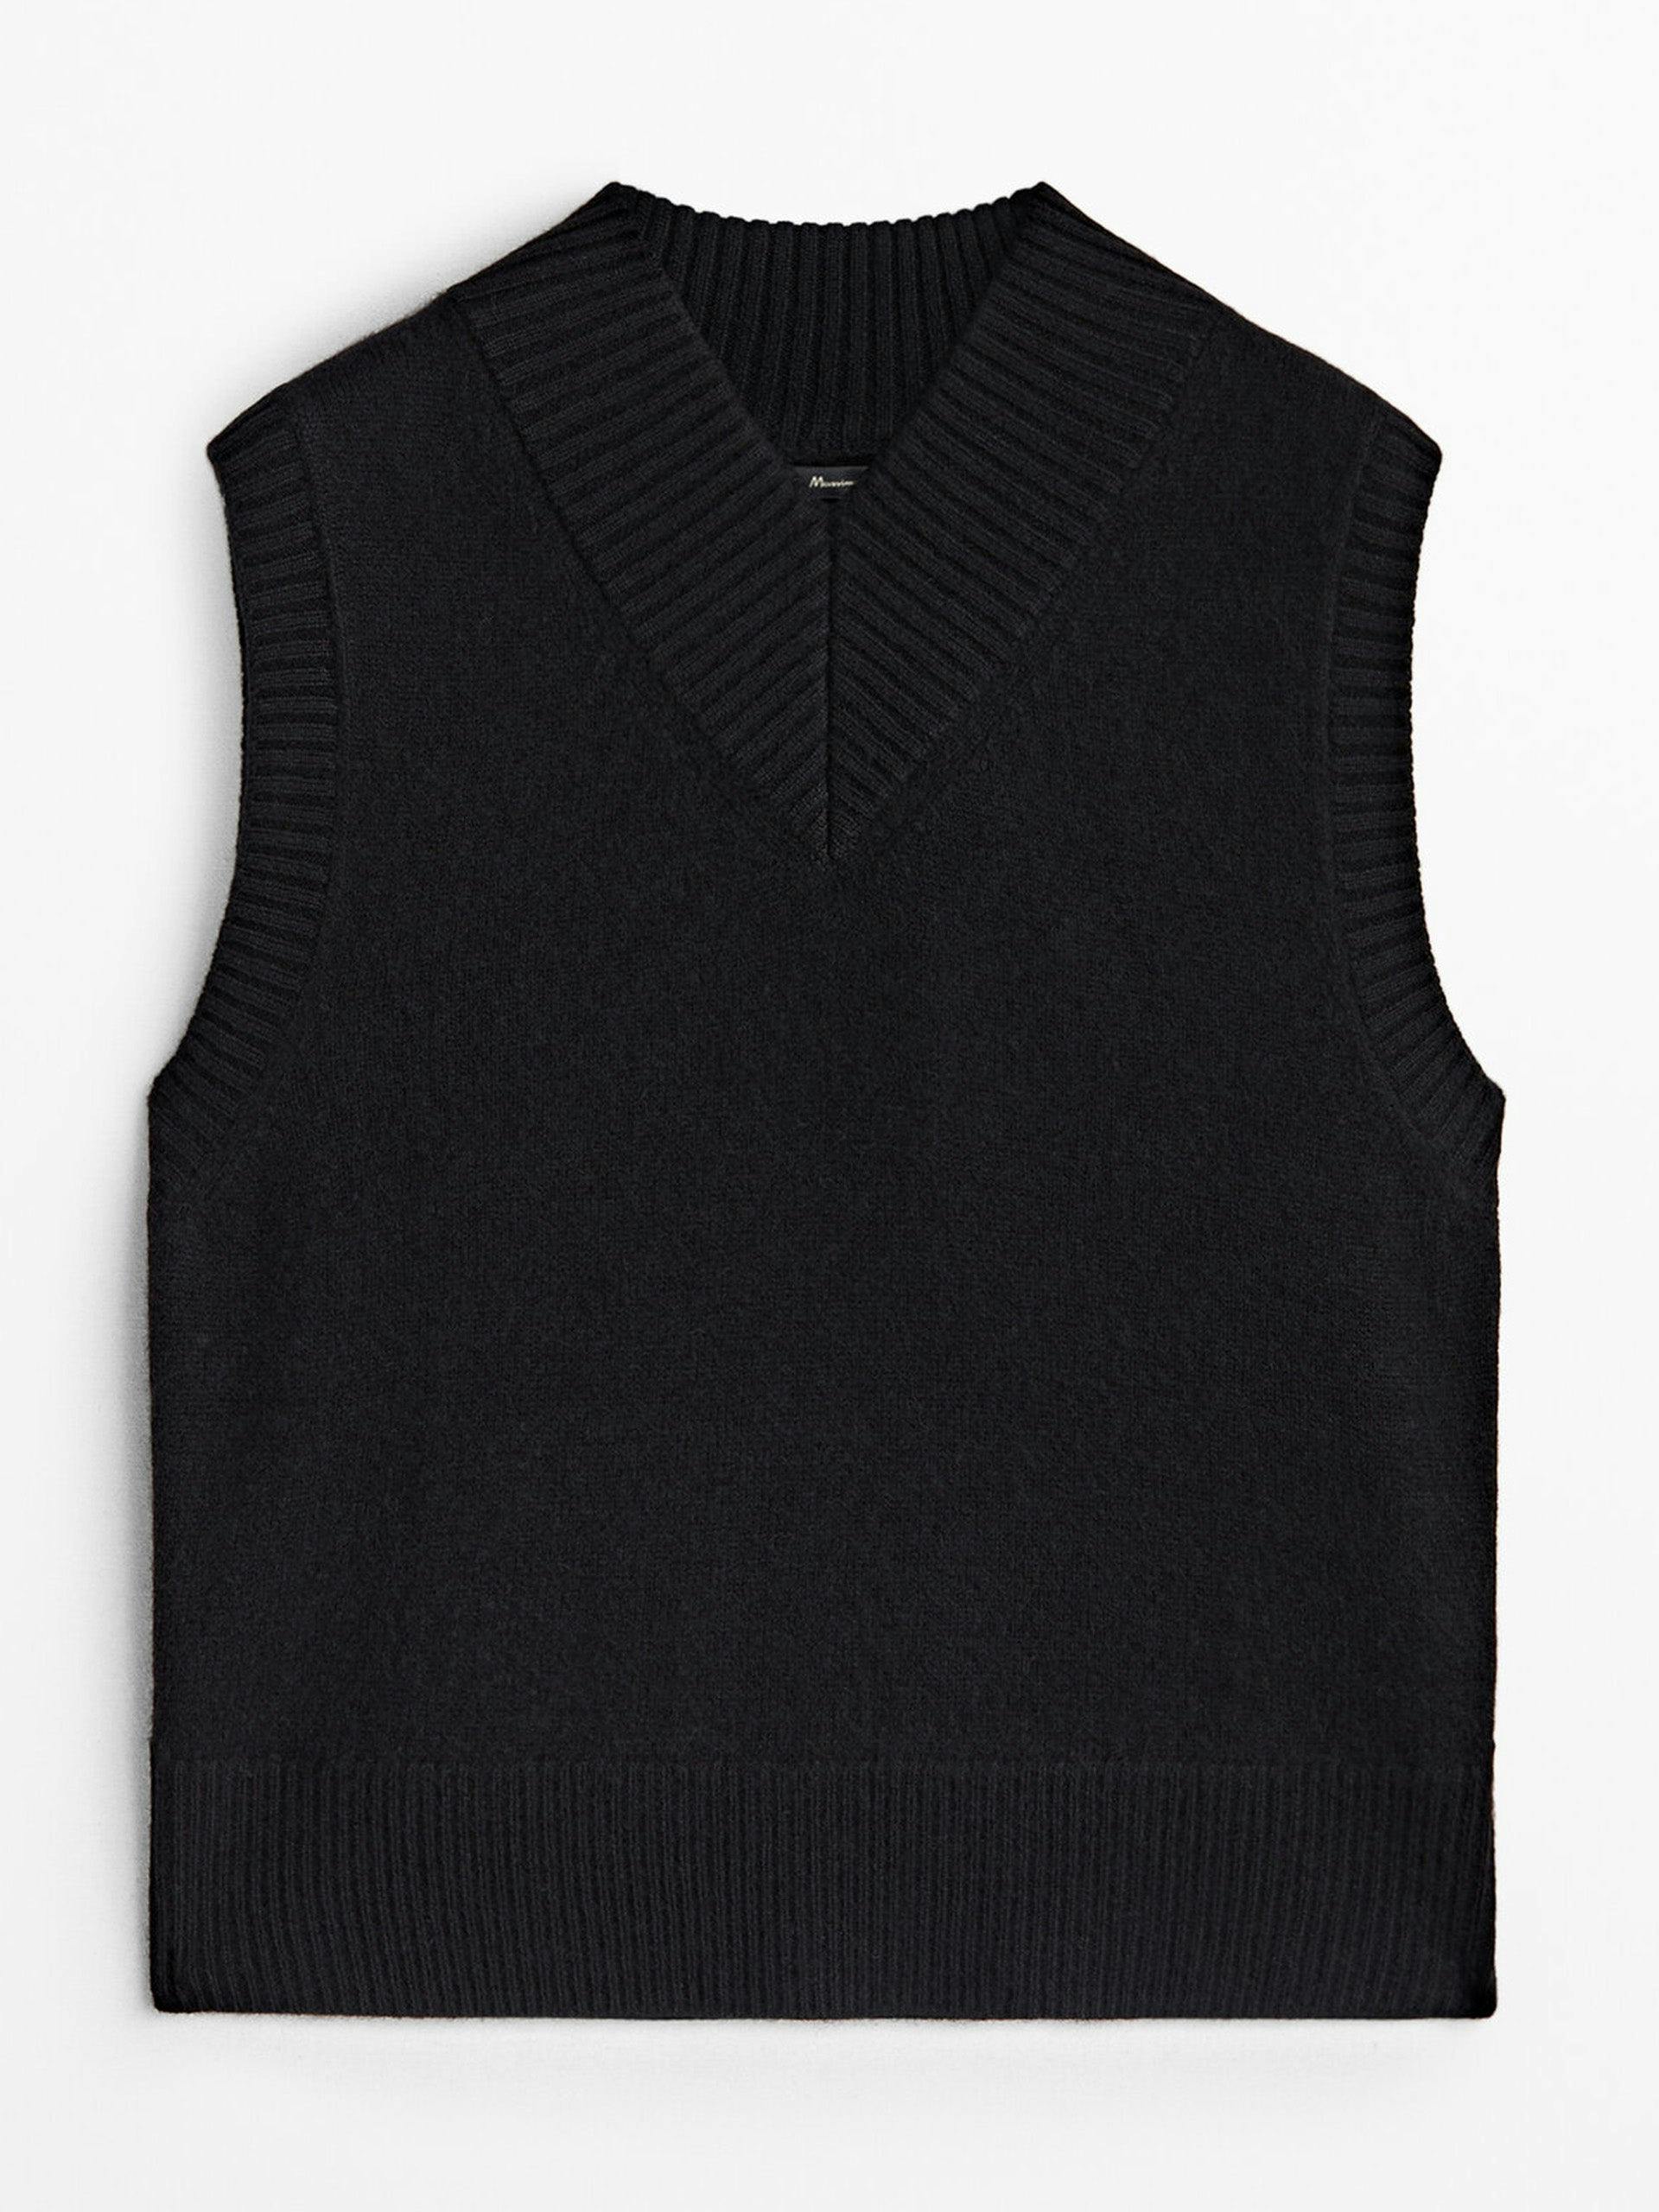 Cashmere short black vest